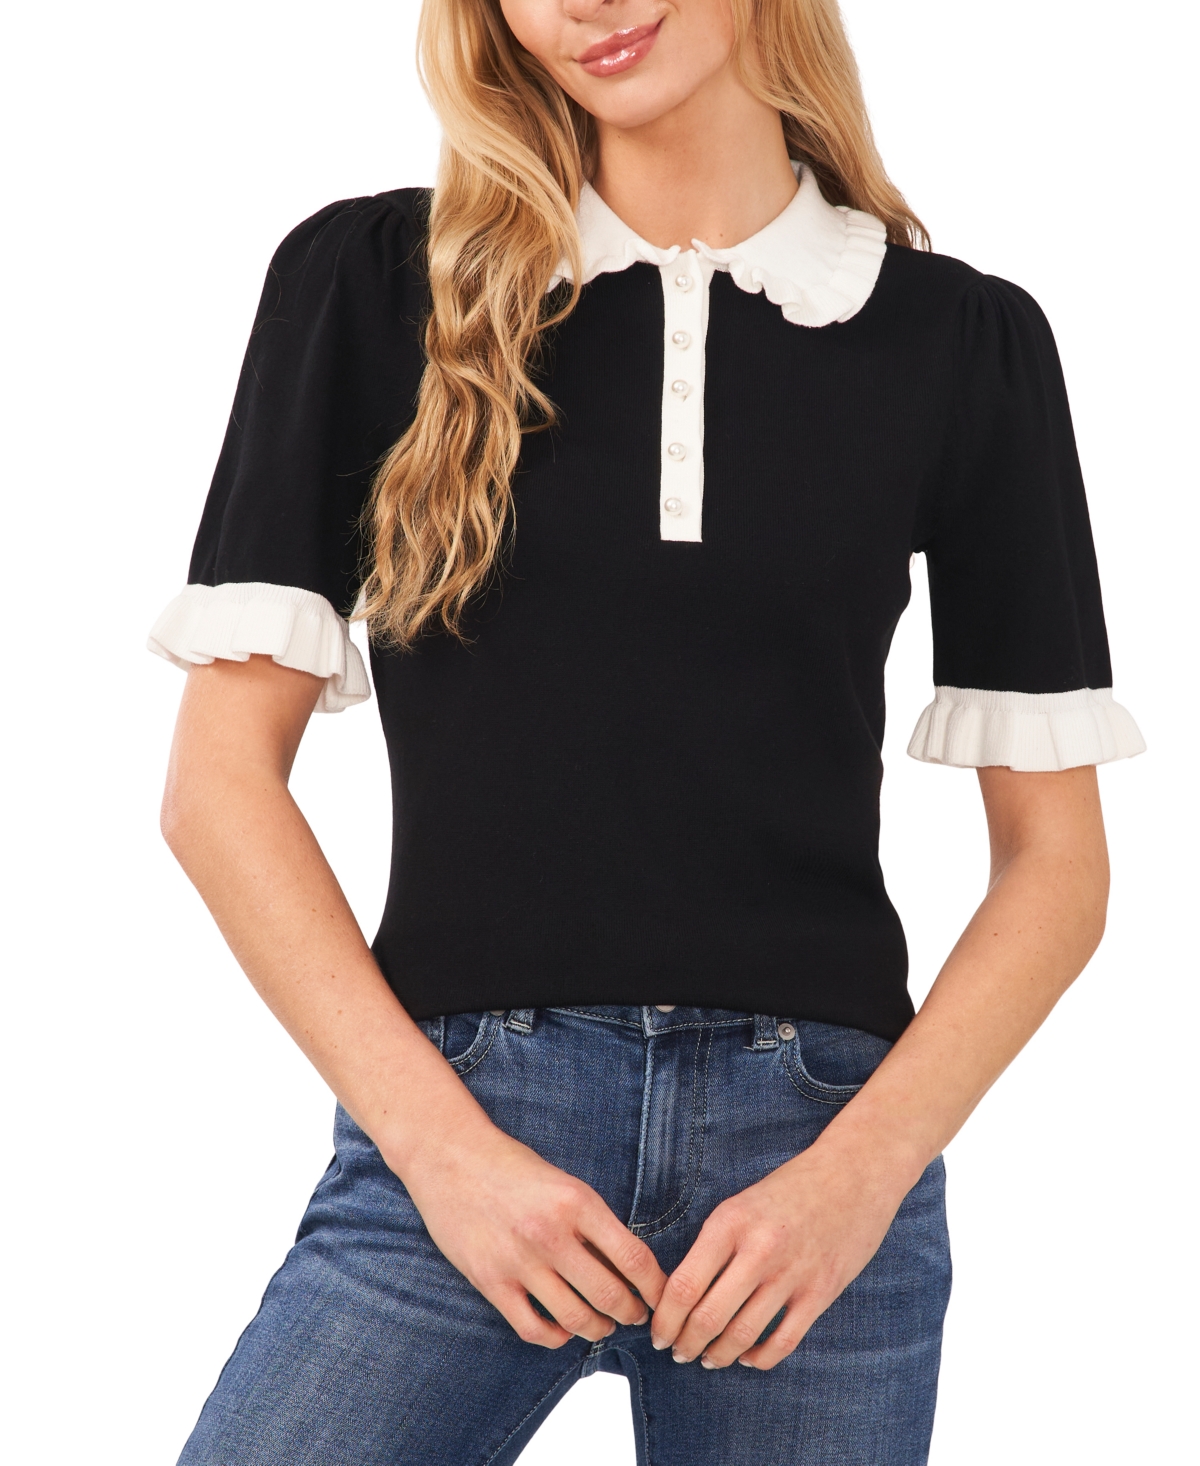 Women's Cotton Ruffle-Collar Short-Sleeve Top - Rich Black